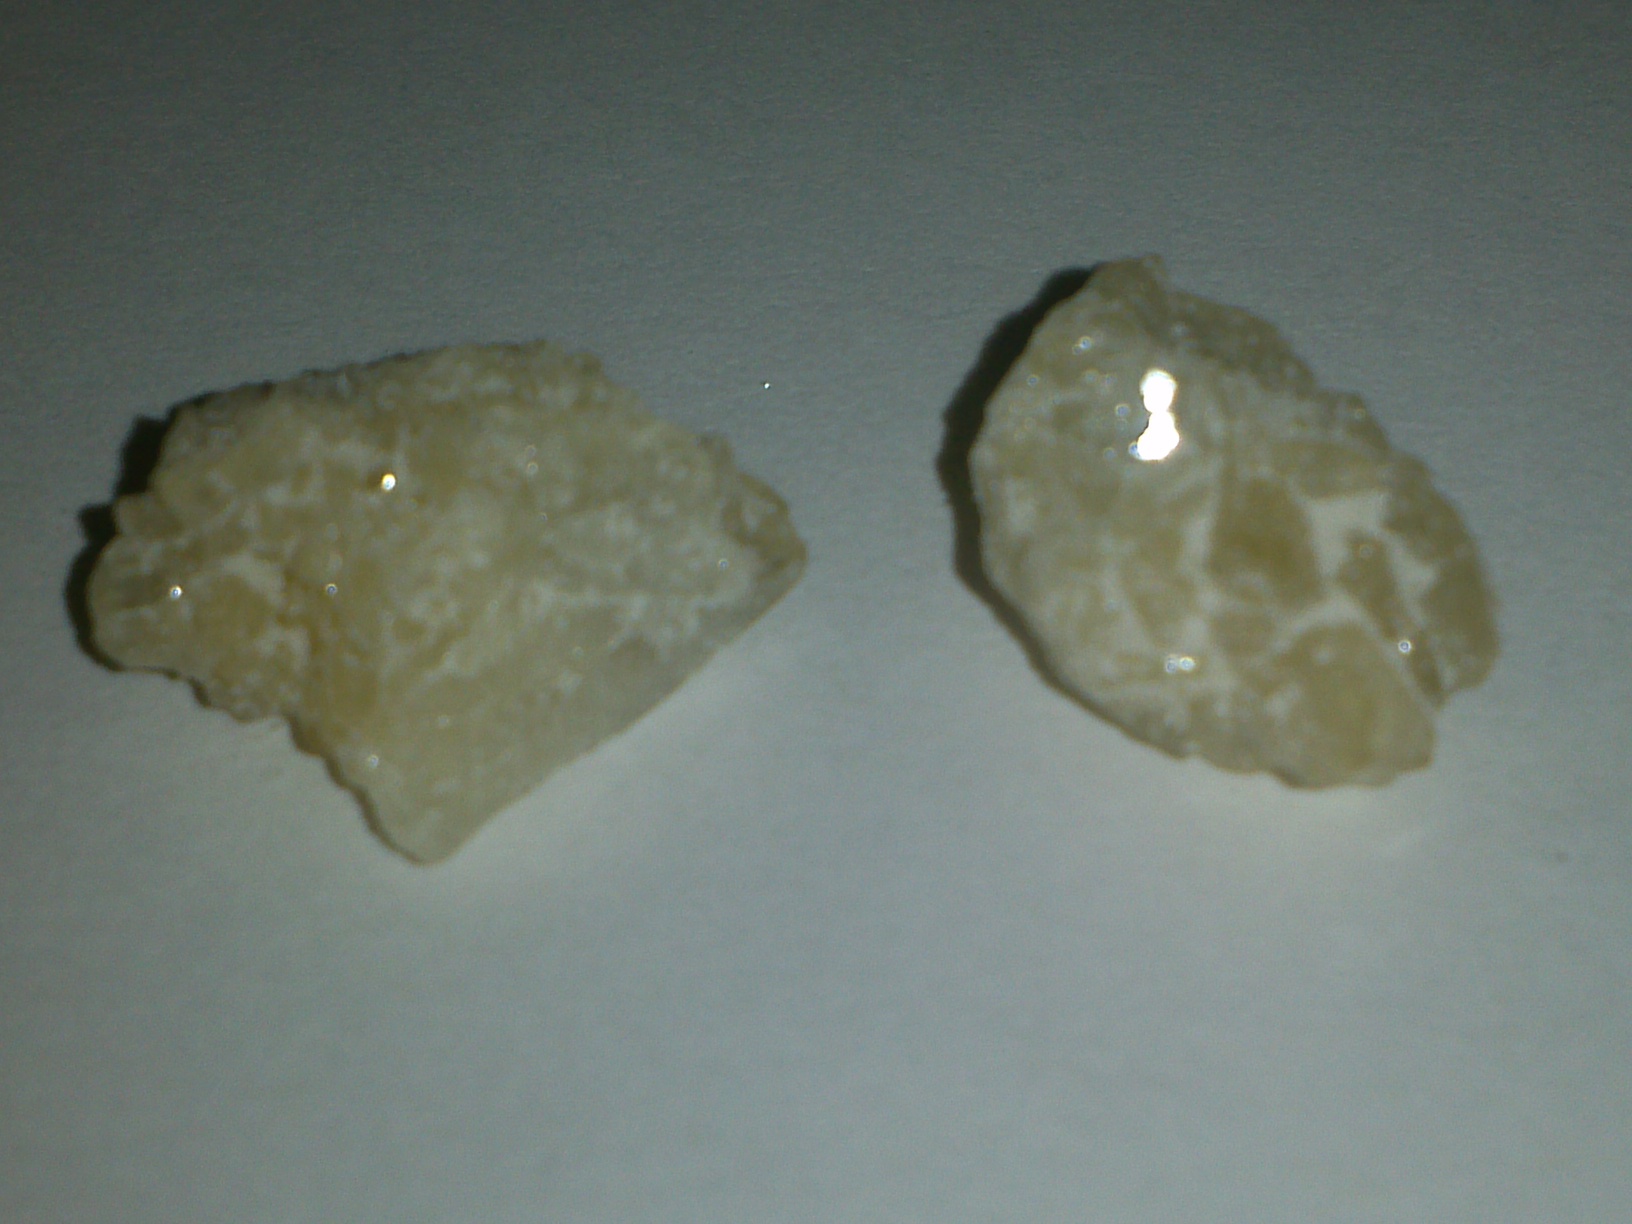 crystal meth,ketamine,alrazolam powder,heroin,molly mdma moon